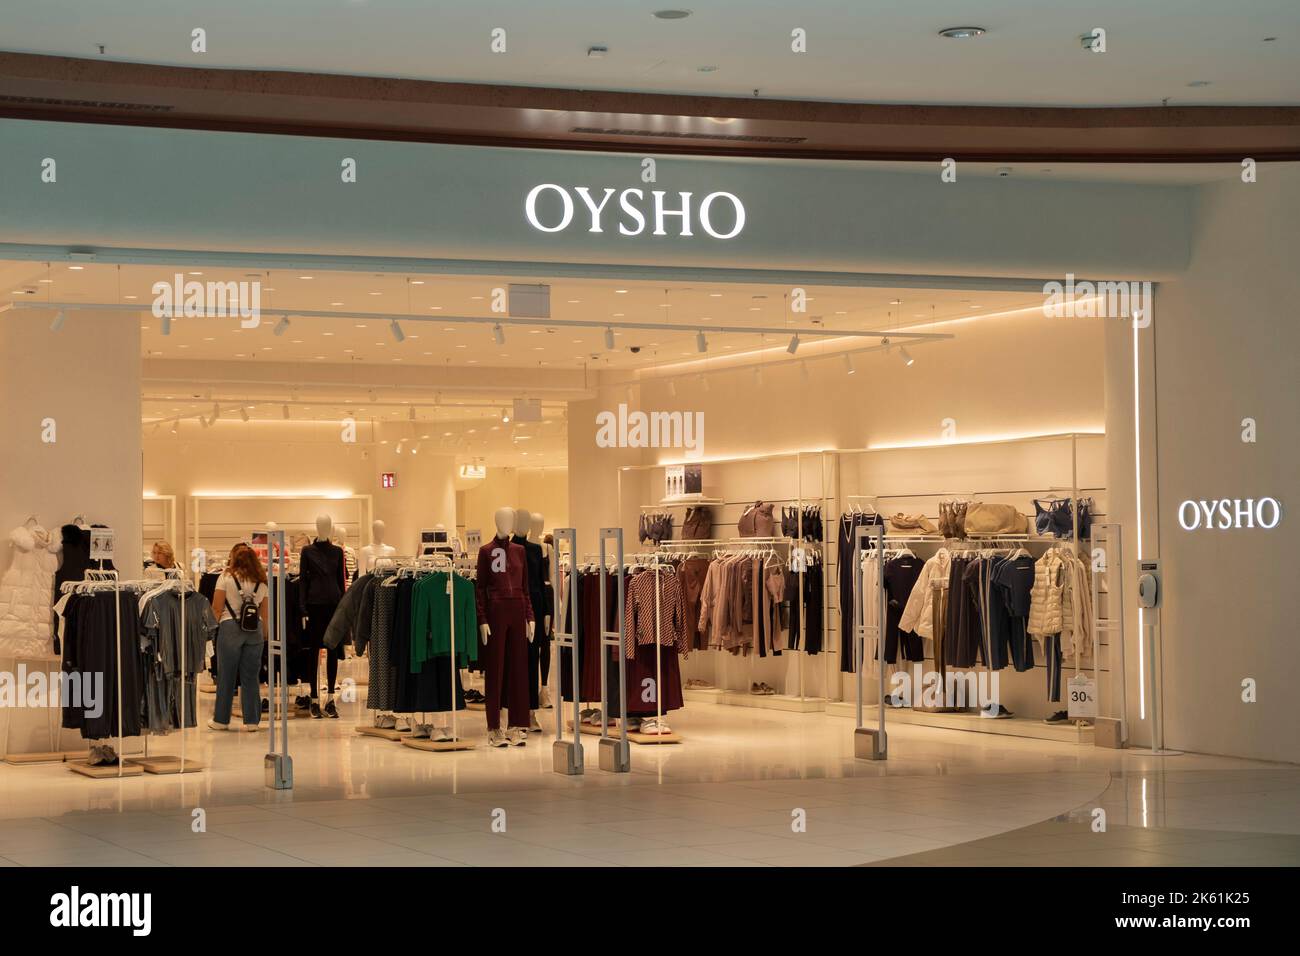 Sofia, Bulgaria - 30 May, 2022: Bright white shop sign of international clothing company OYSHO in a shopping mall Stock Photo